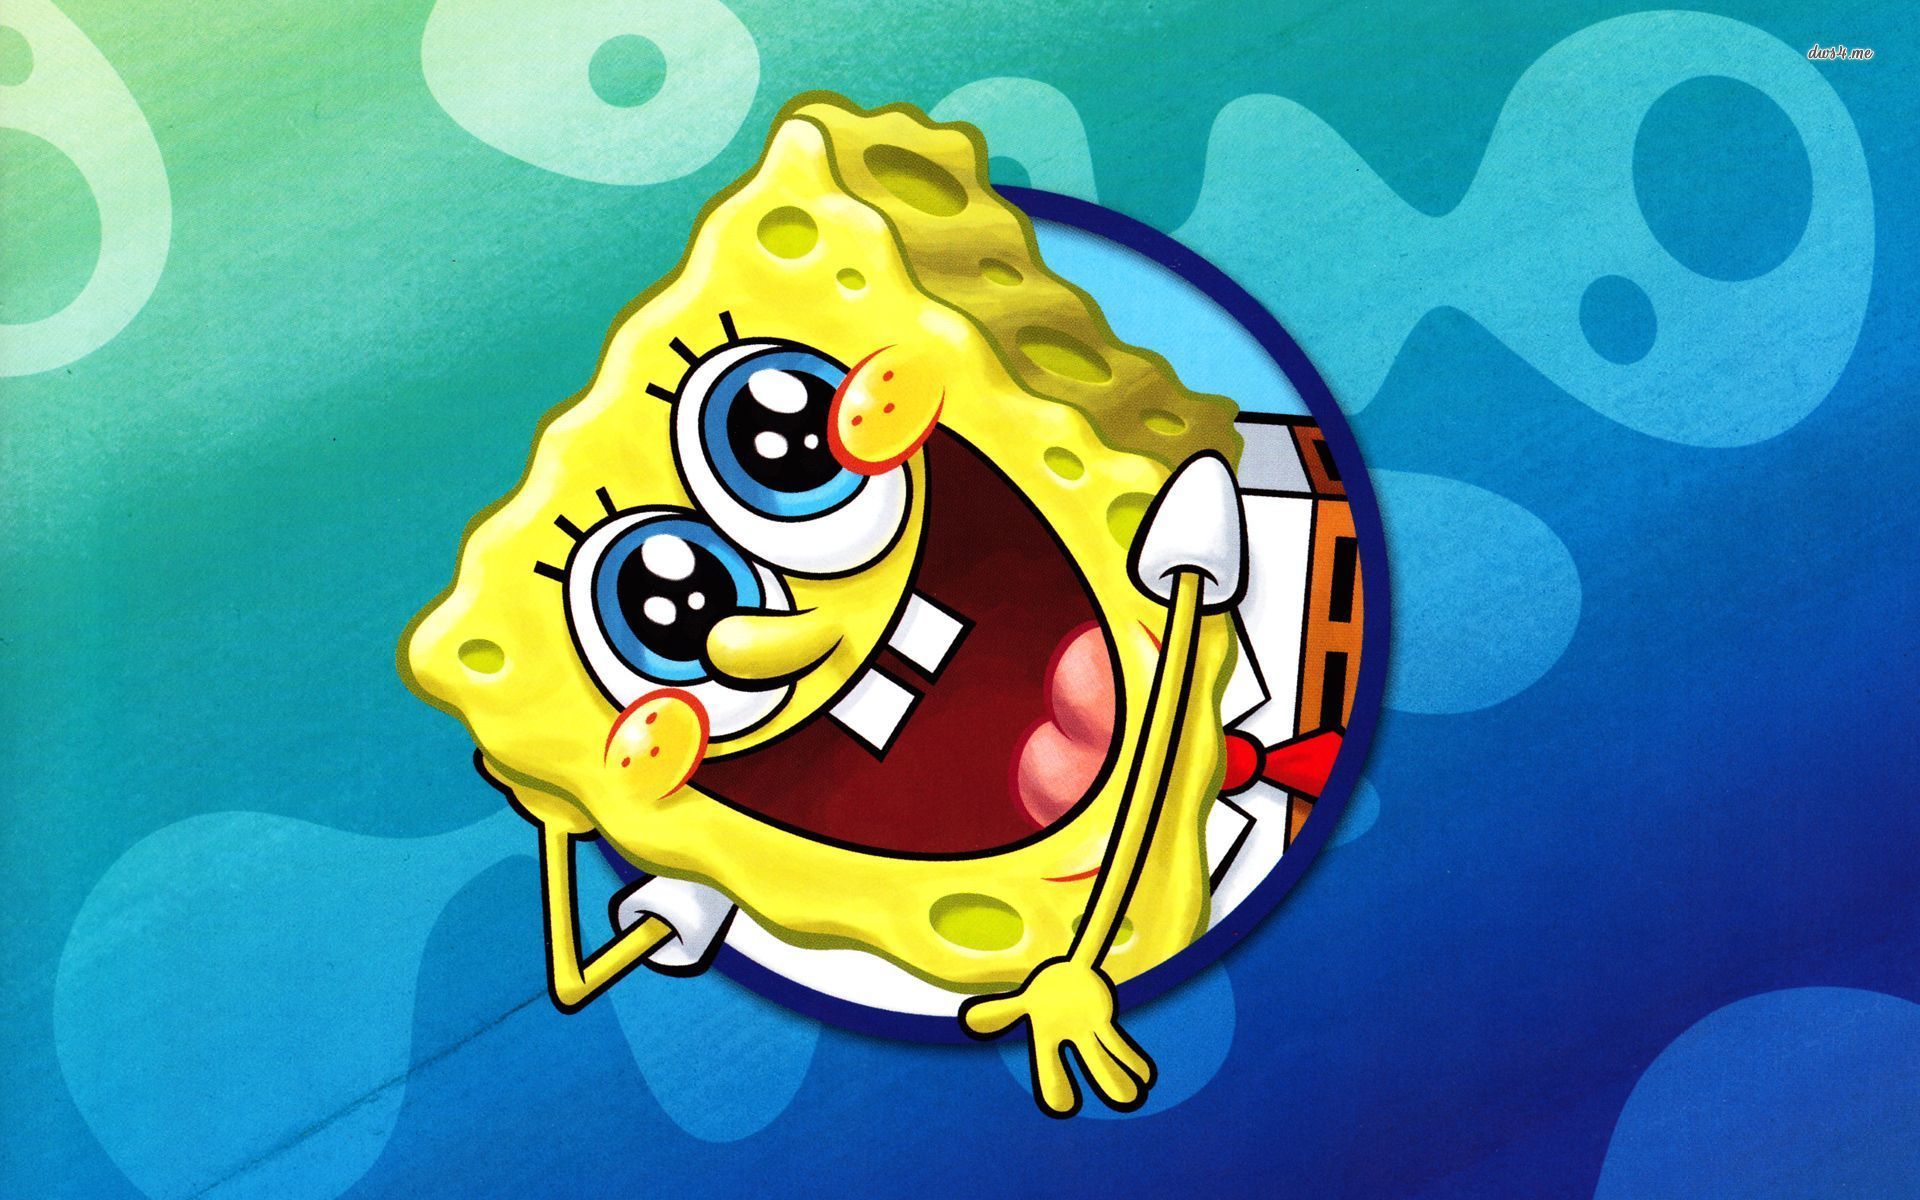 Spongebob is happy. Drawn 3D wallpaper wallpaper download. Wallpaper, picture, photo